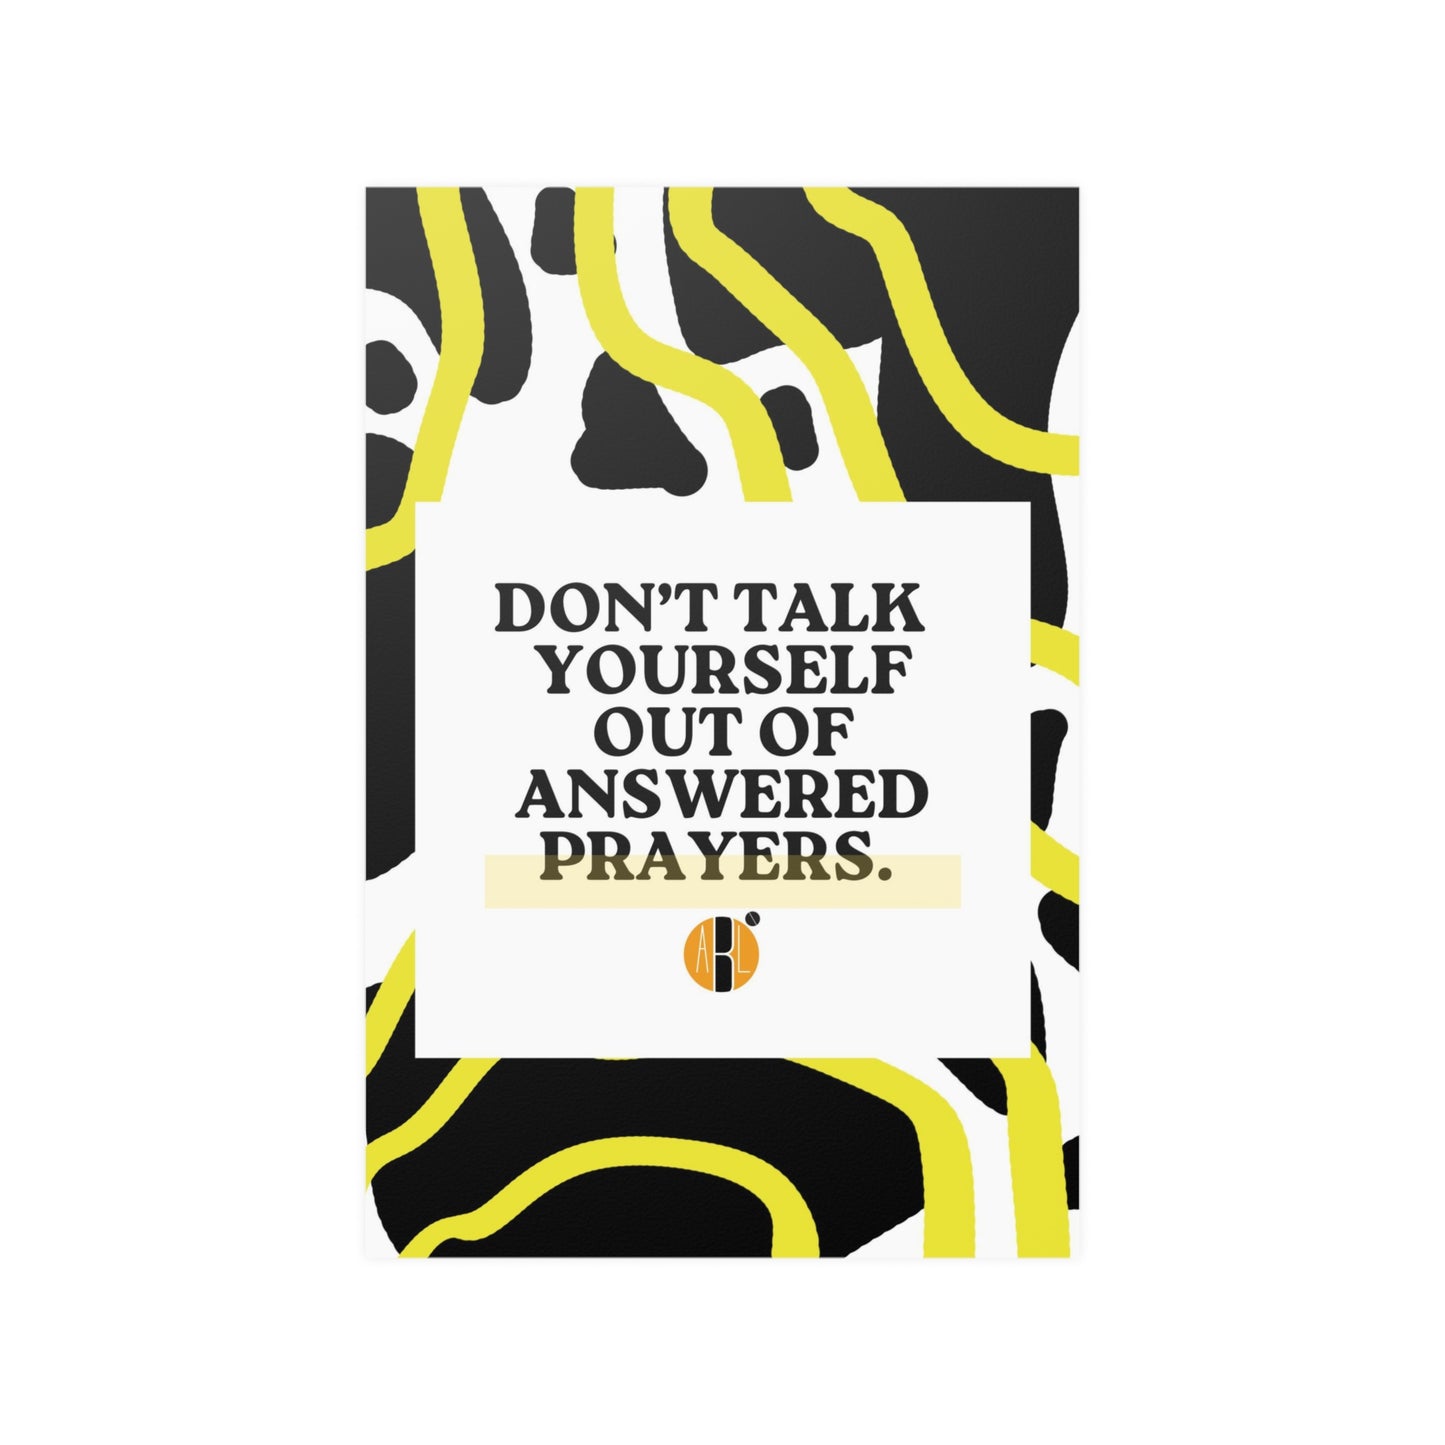 ABL Inspirational Poster: " Don't Talk..."